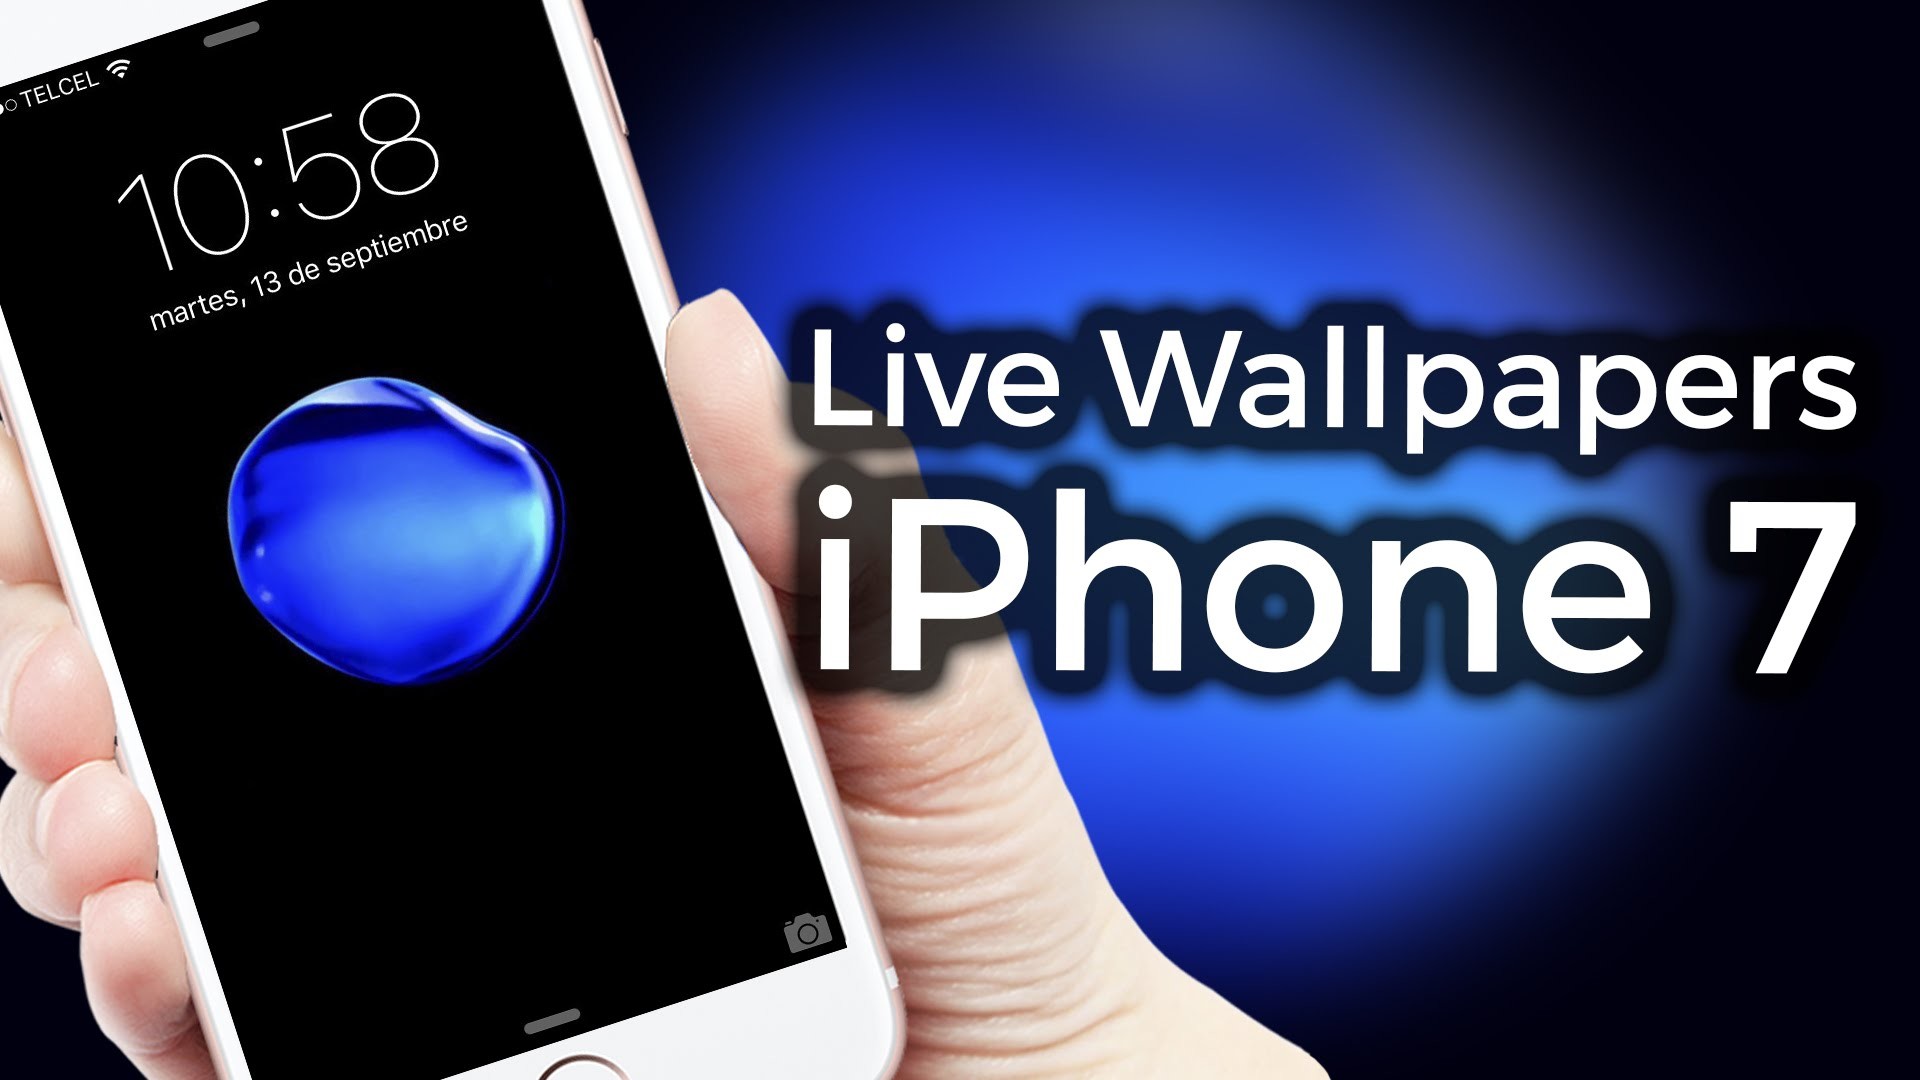 1920x1080 iPhone 7 Live Wallpapers, iPhone 5S,6,6S Cydia tweak | ZIDACO - YouTube